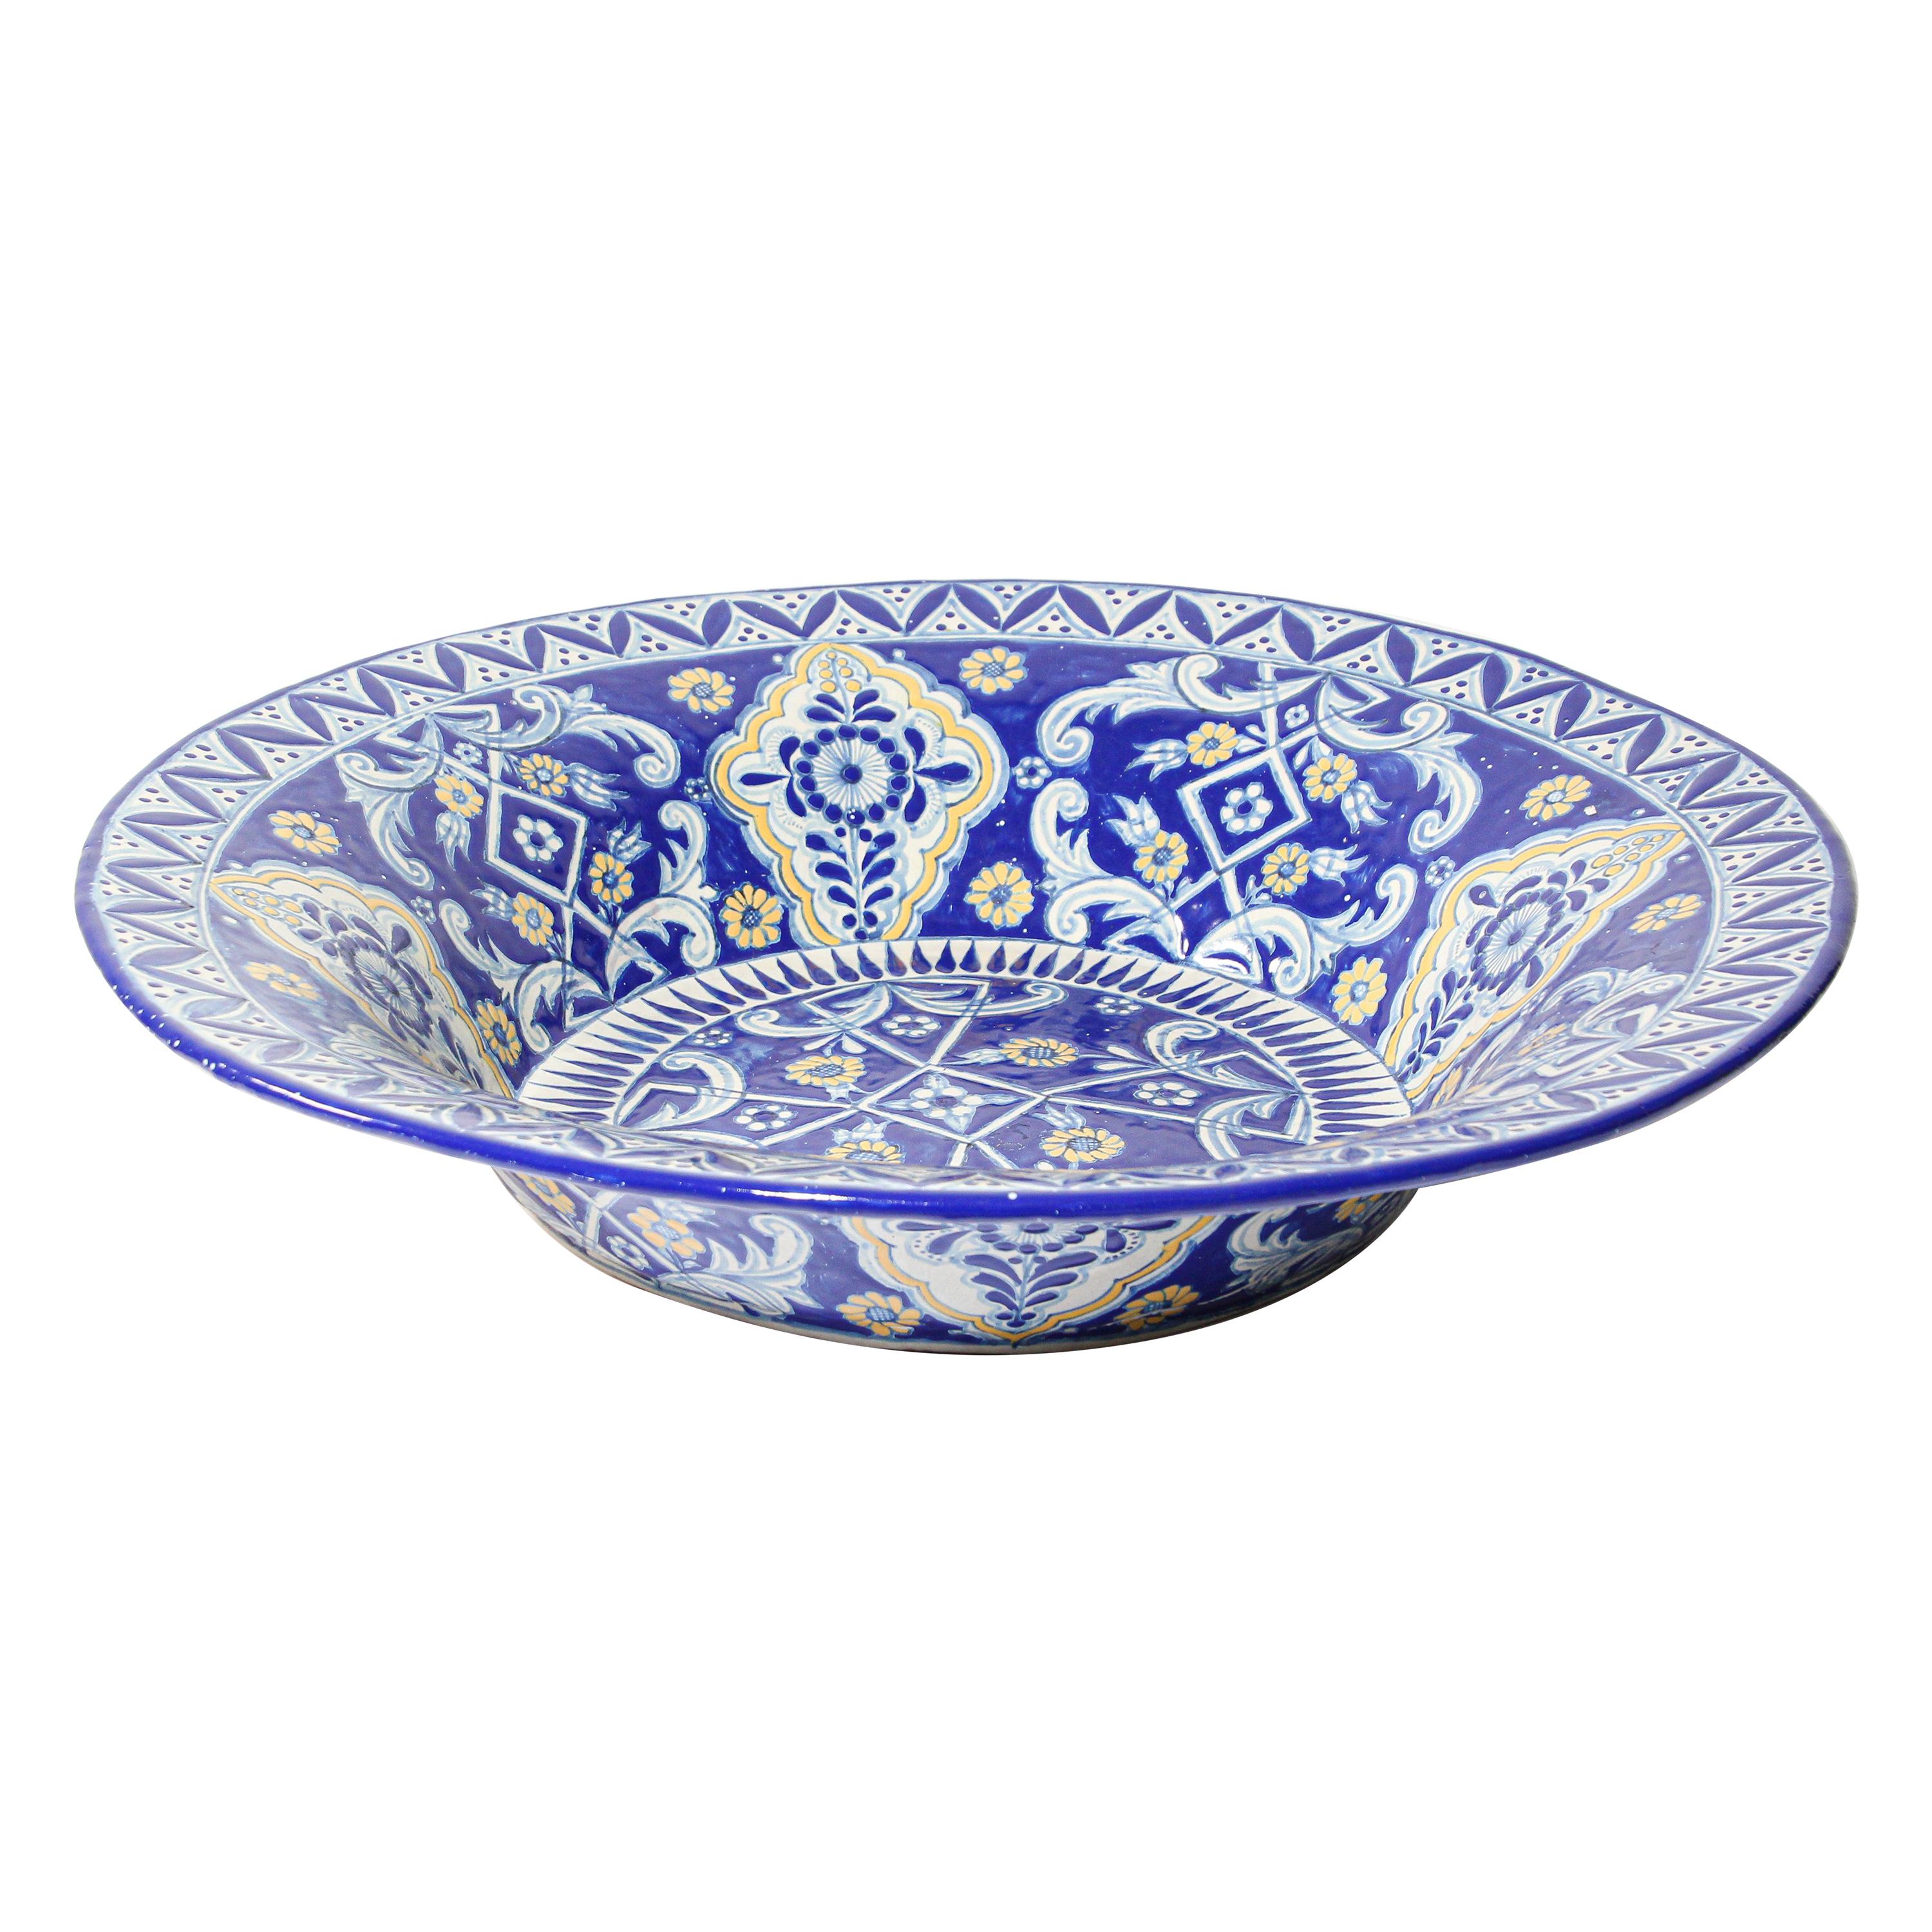 Oversized Blue and White Mexican Talavera Glazed Ceramic Bowl